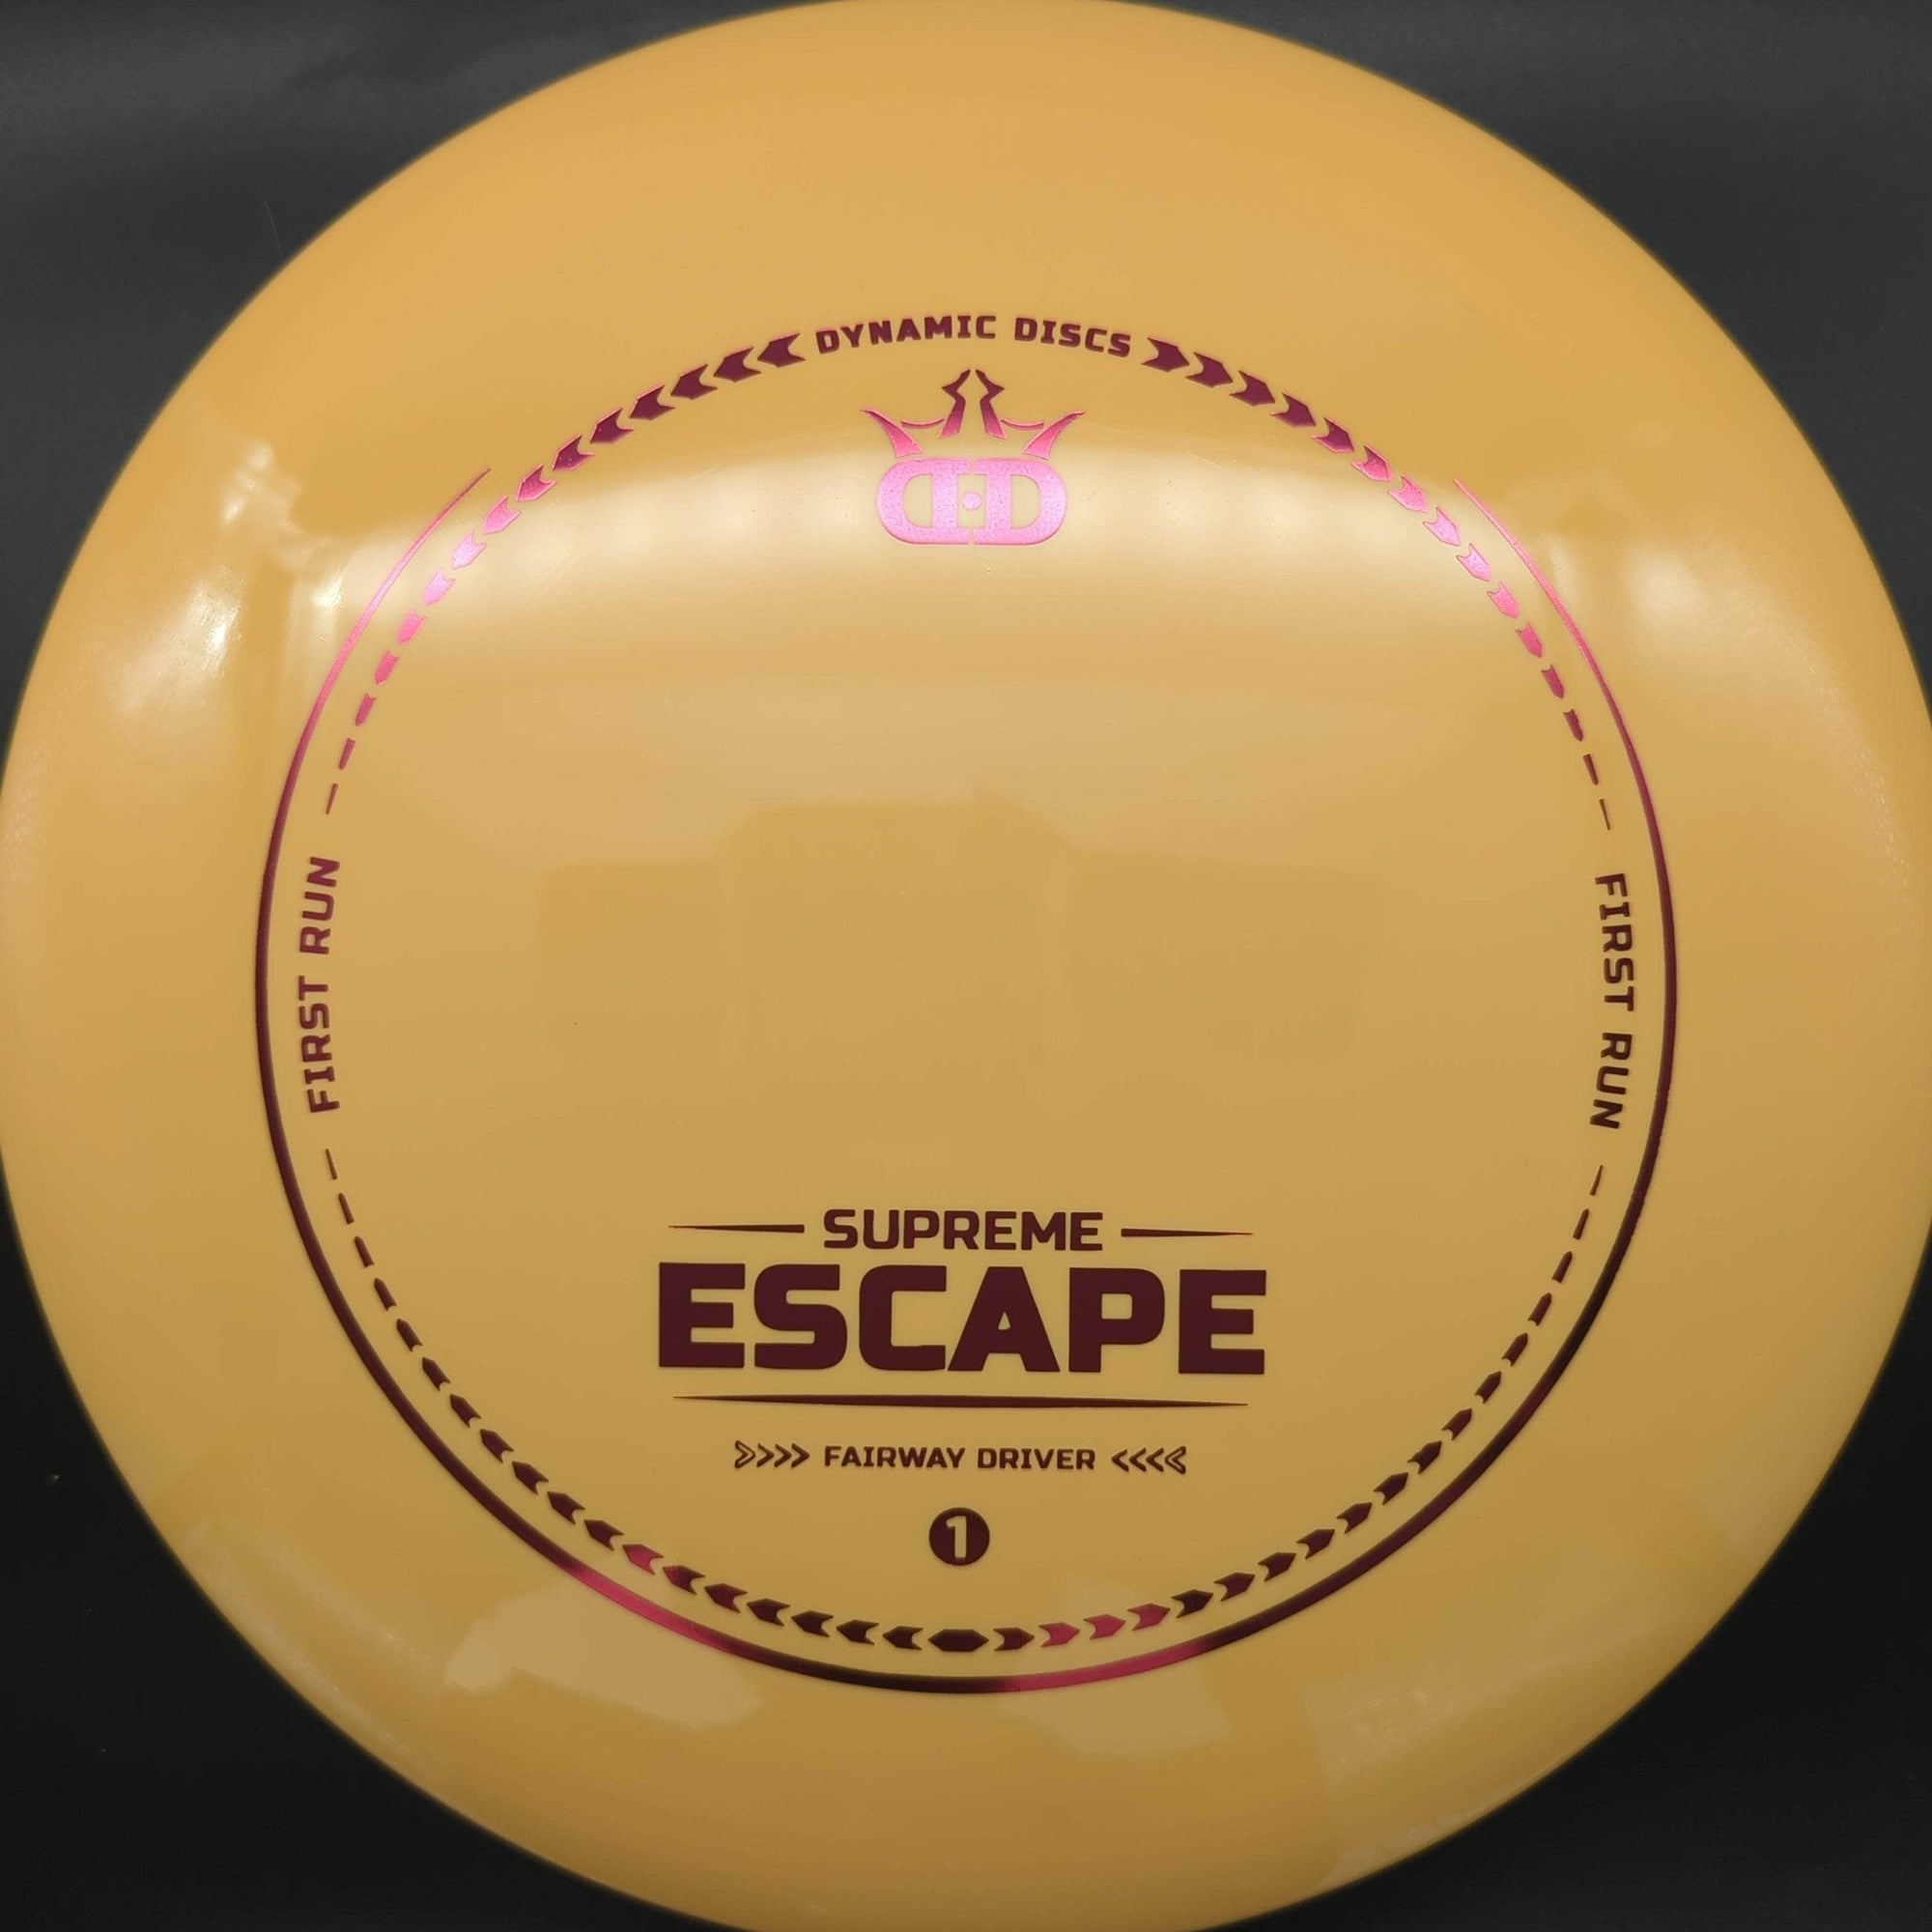 Dynamic Discs Fairway Driver Escape, Supreme Plastic, First Run New